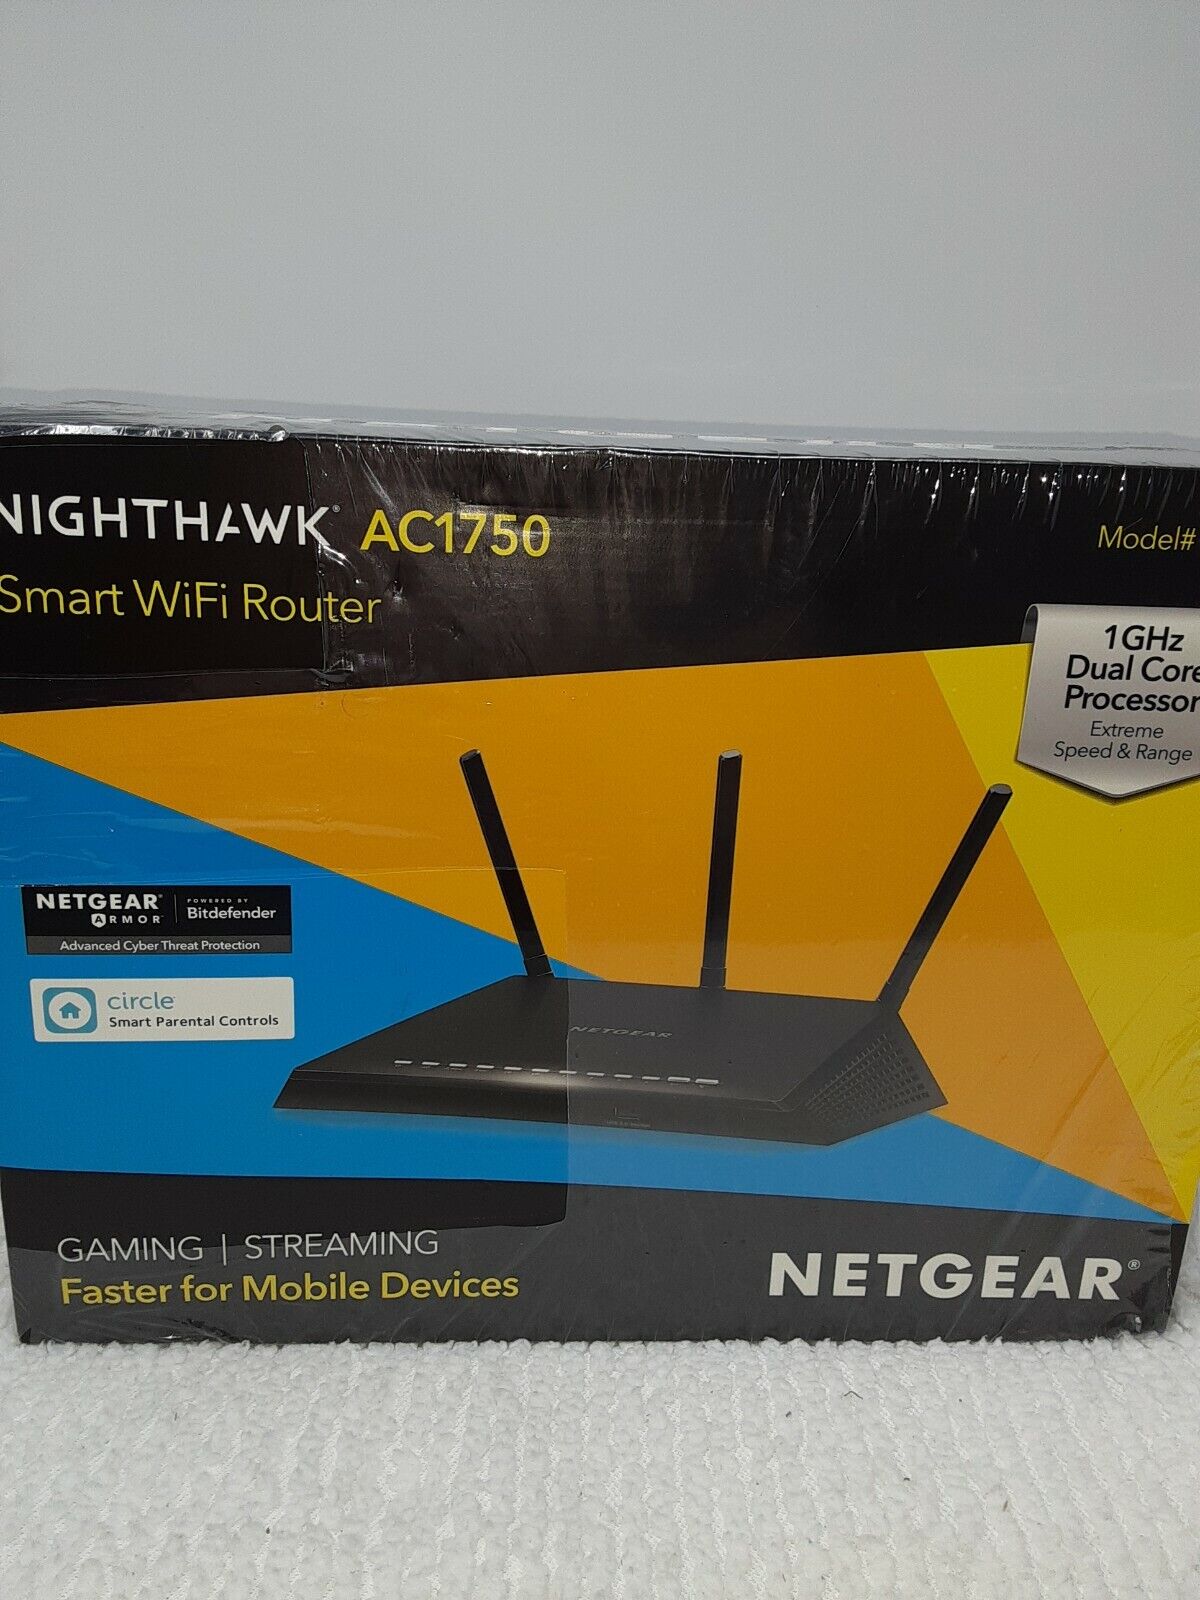 NETGEAR NIGHTHAWK AC1750 SMART WIFI ROUTER GAMING #R6700 BRAND NEW SEALED 